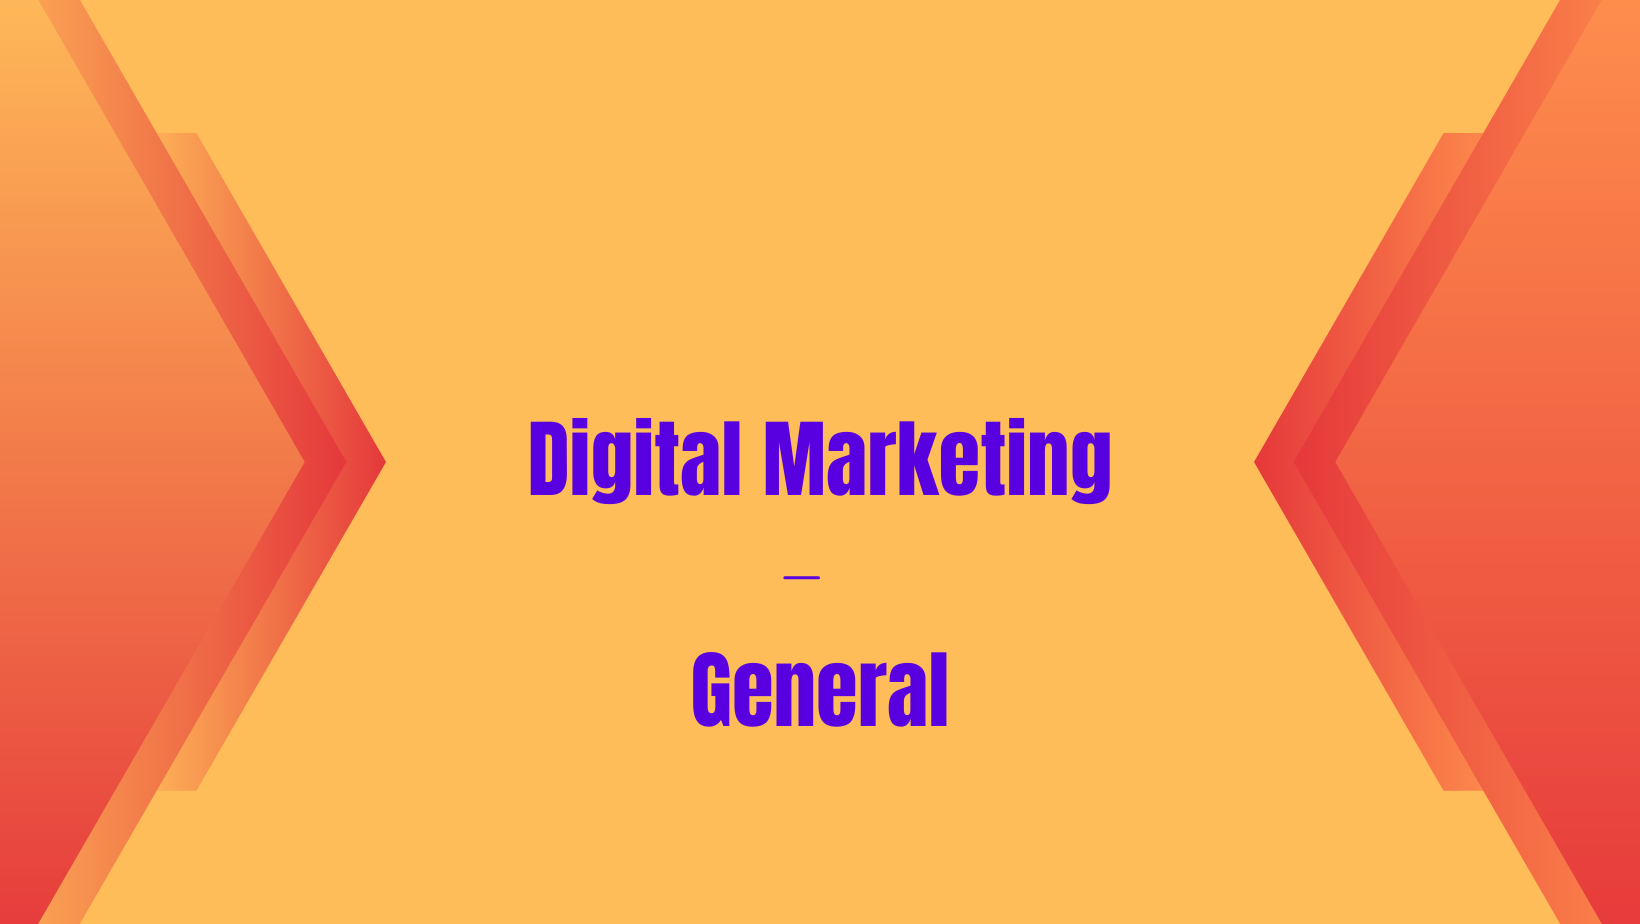 Digital Marketing: General